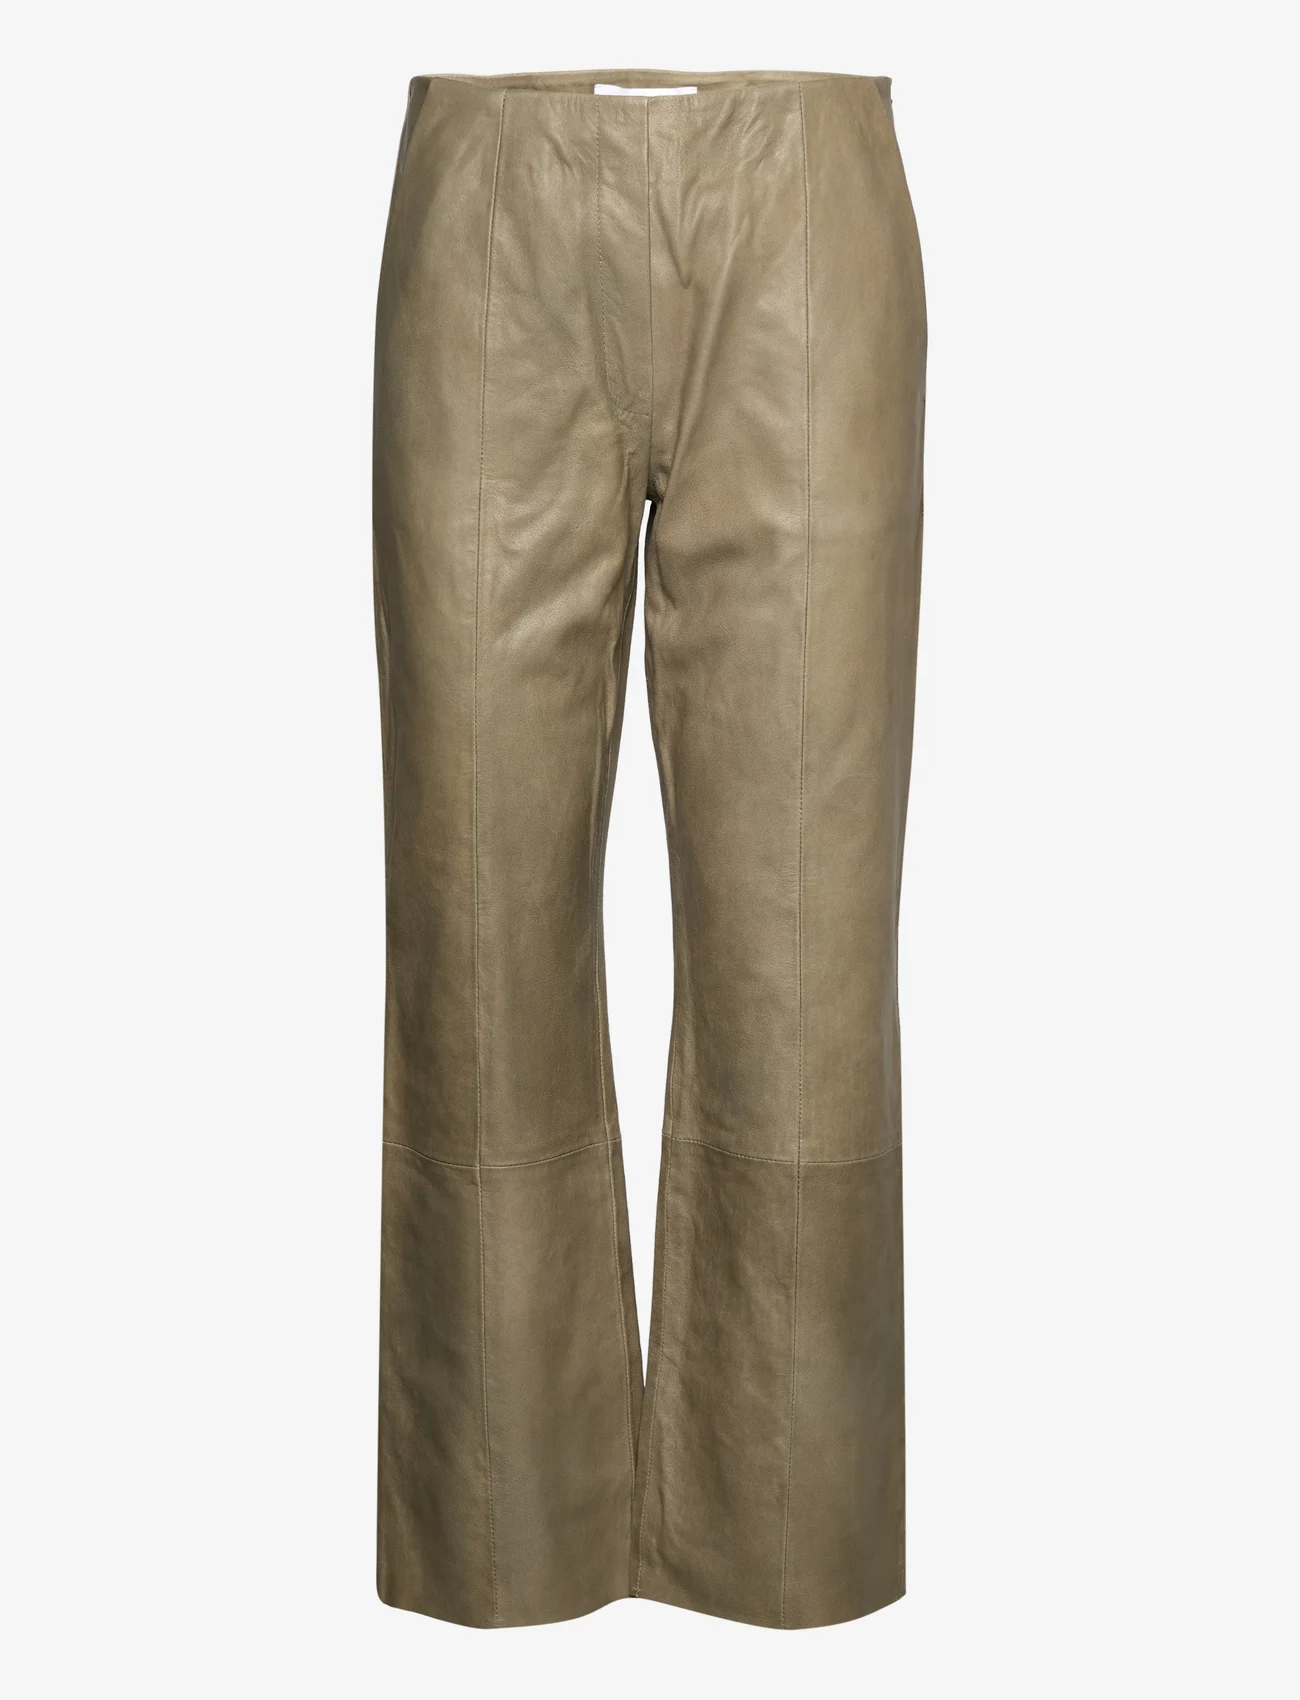 Day Birger et Mikkelsen - Lenni - Crinkled Leather - vakarėlių drabužiai išparduotuvių kainomis - celadon green - 0